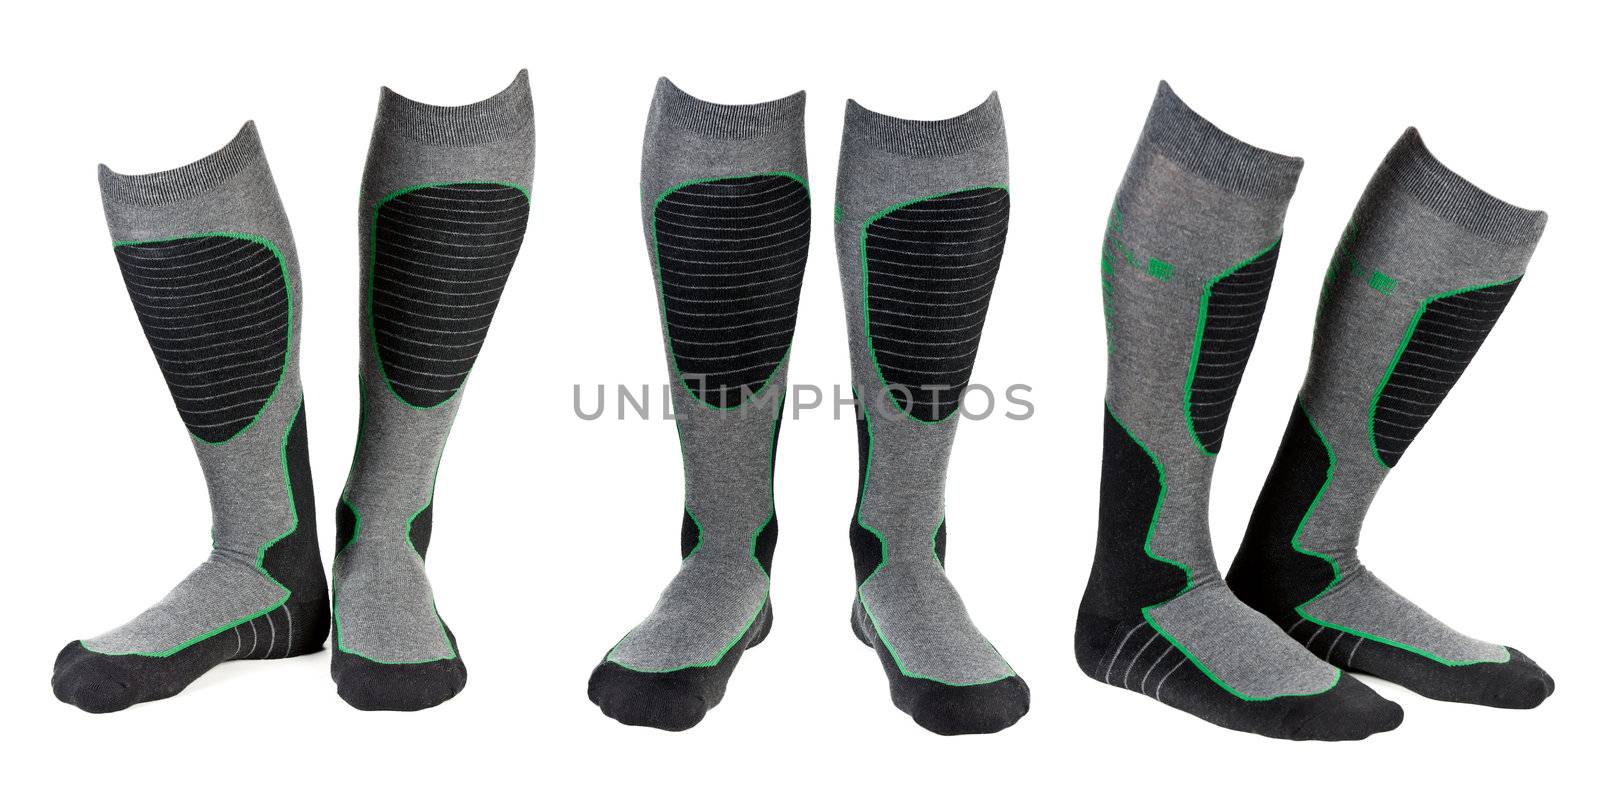 A collage of three pairs of gray ski socks by RuslanOmega